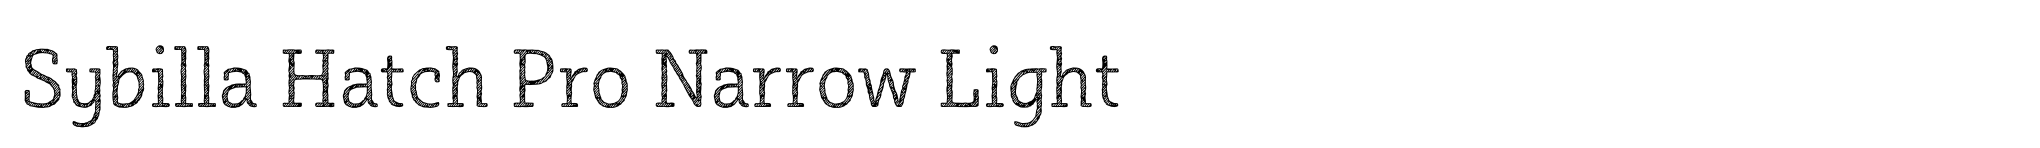 Sybilla Hatch Pro Narrow Light image